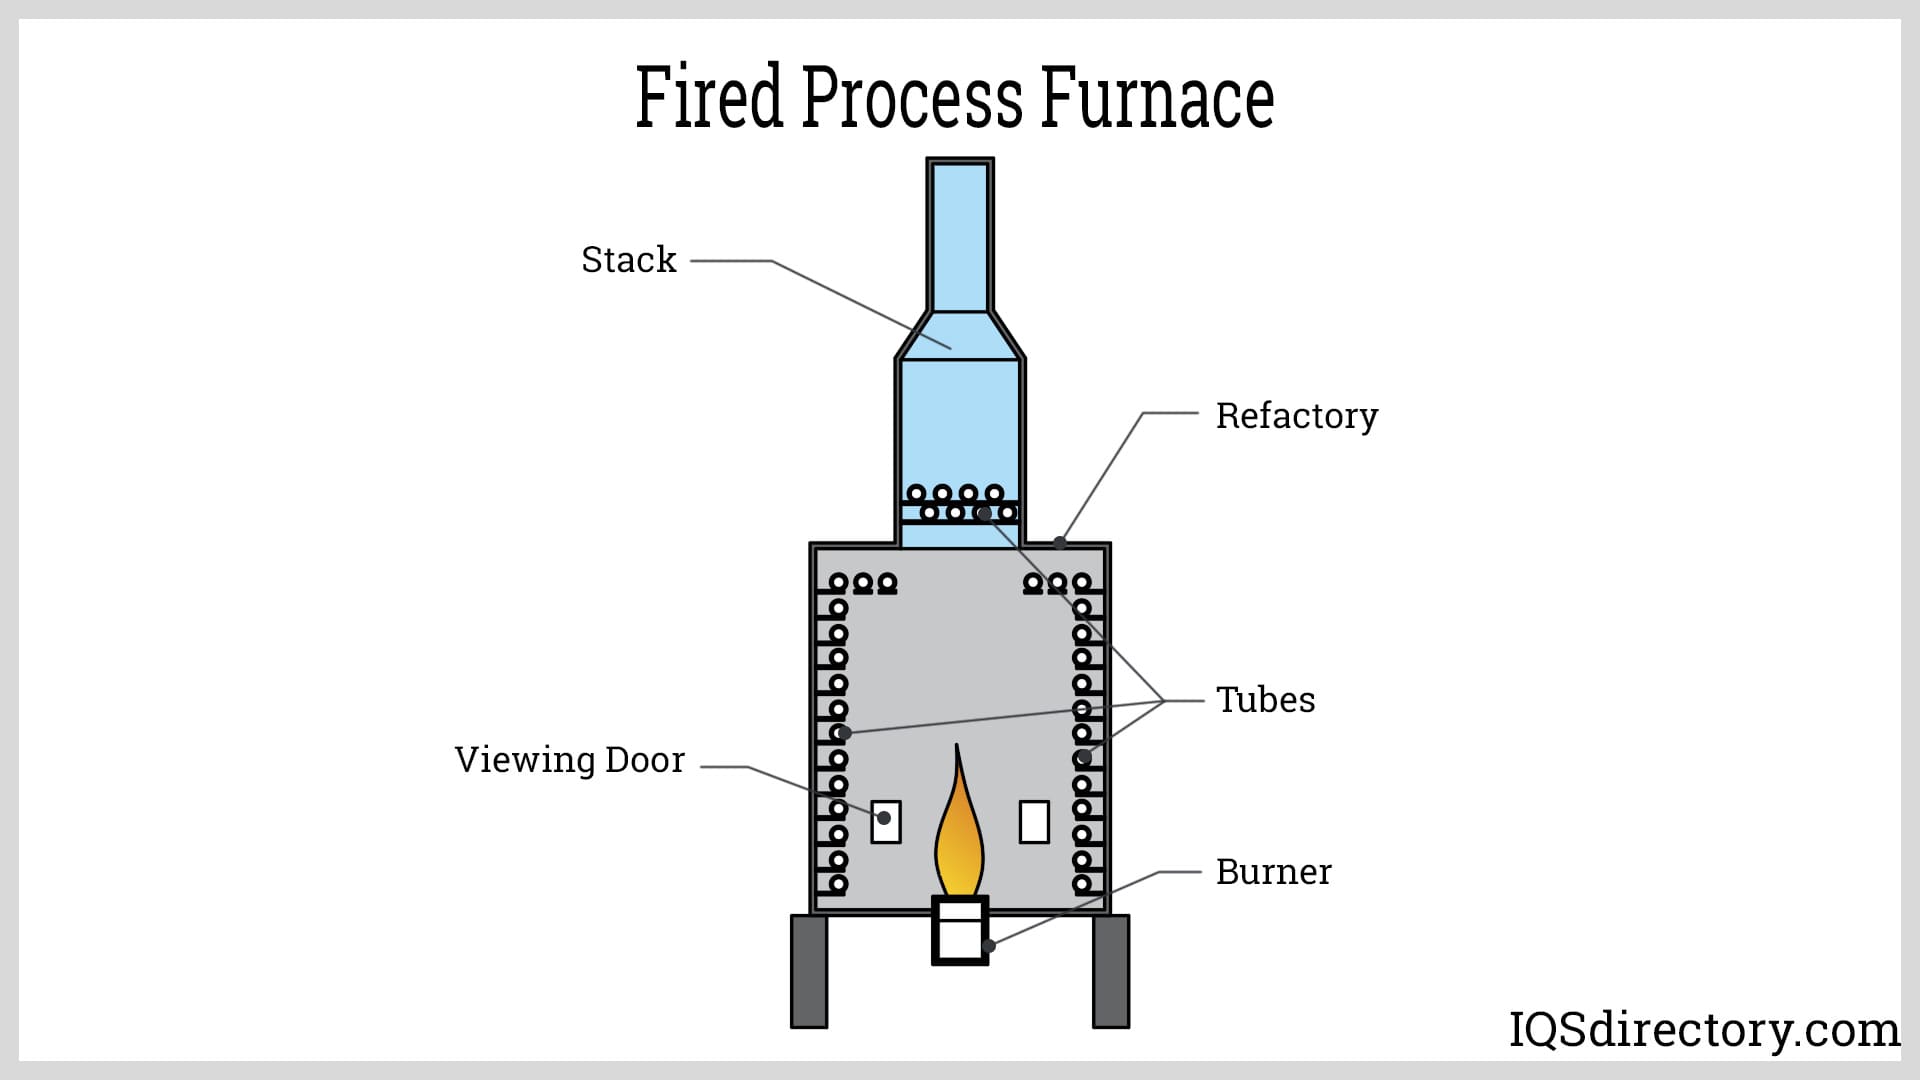 Fired Process Furnace